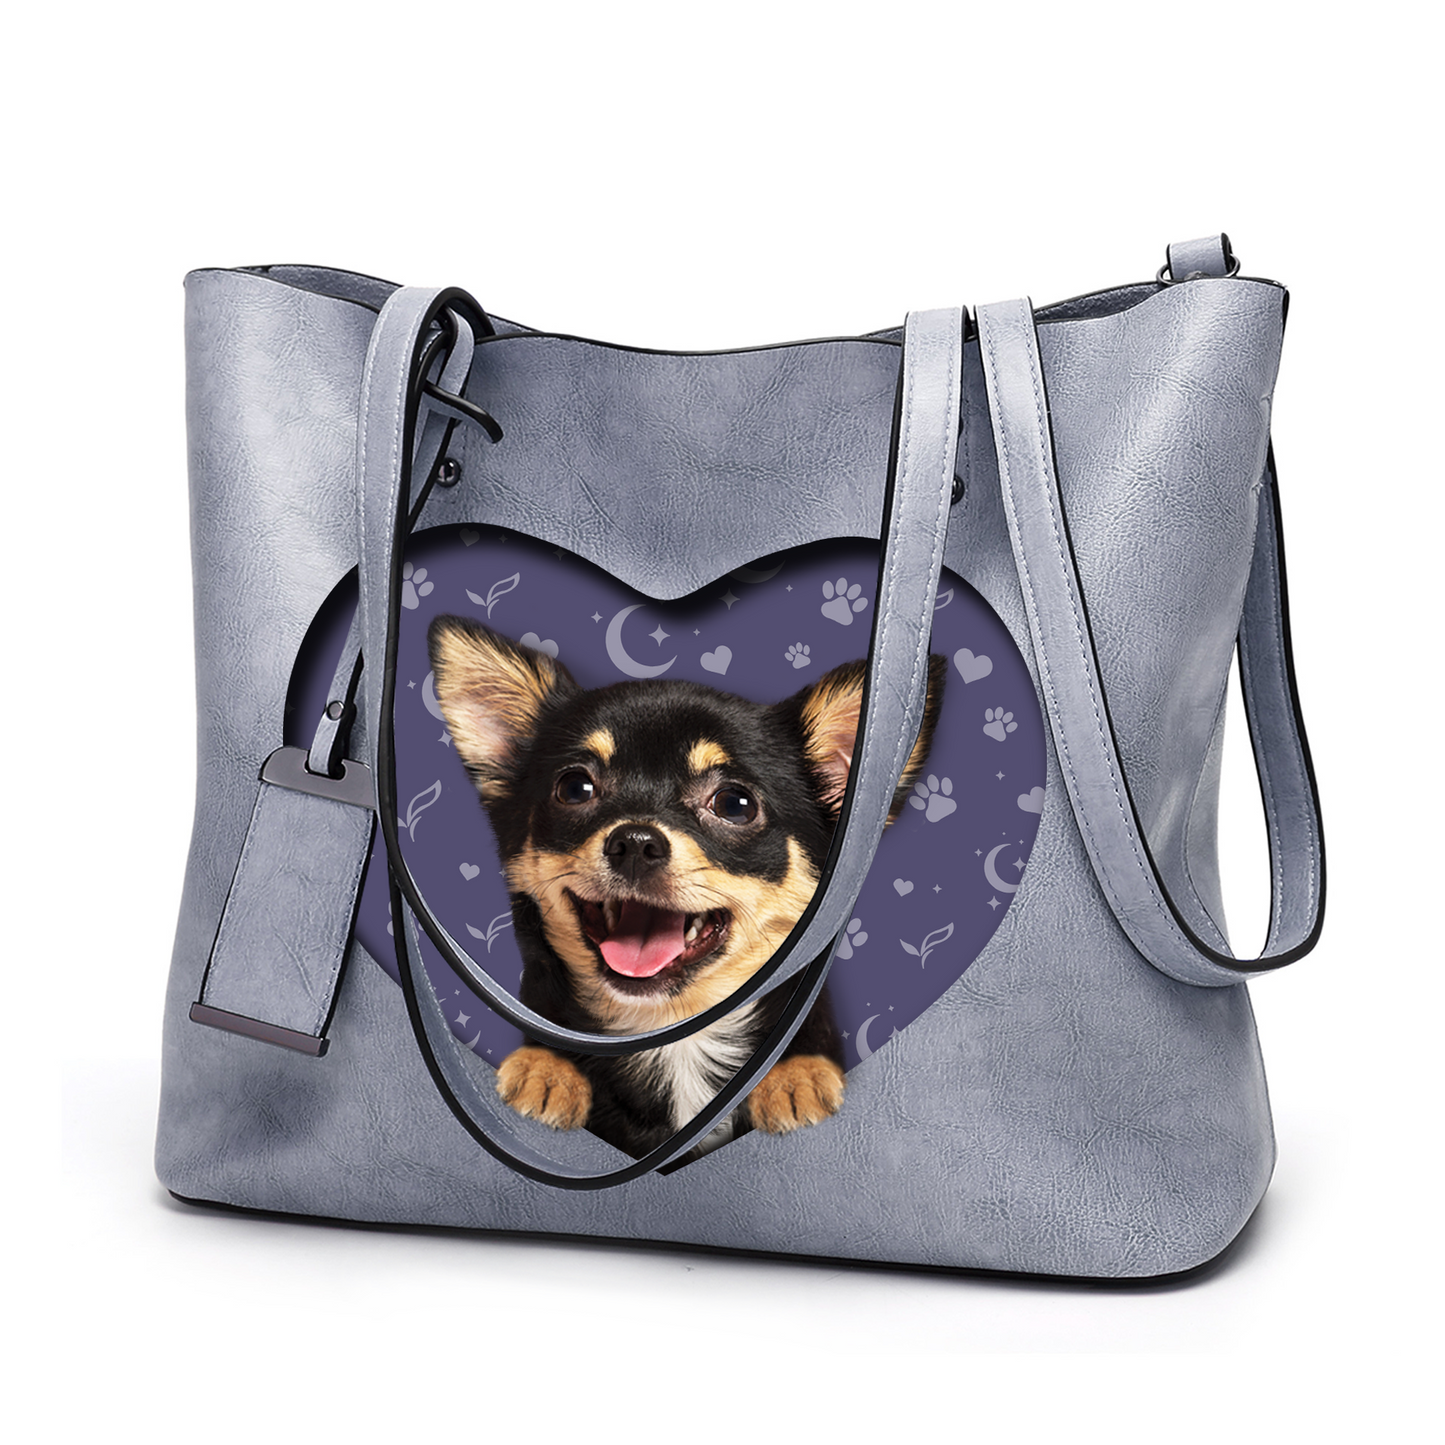 I Know I'm Cute - Chihuahua Glamour Handbag V3 - 11